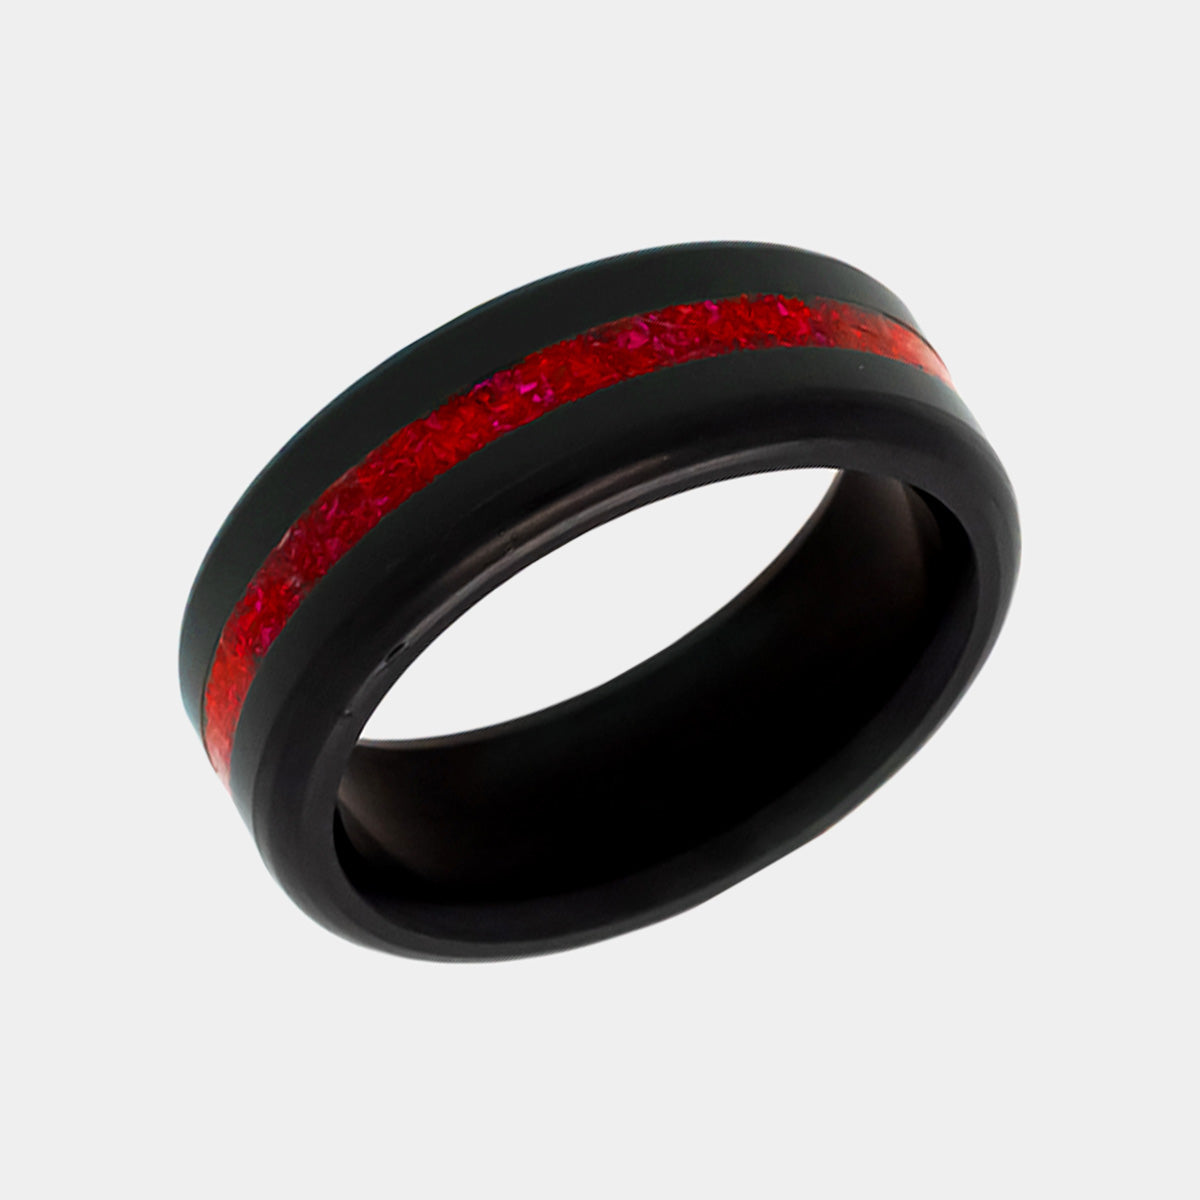 Black Diamond - Men’s Ring 8mm - Red Opal Inlay - KRATOS - Elysium Black Diamond